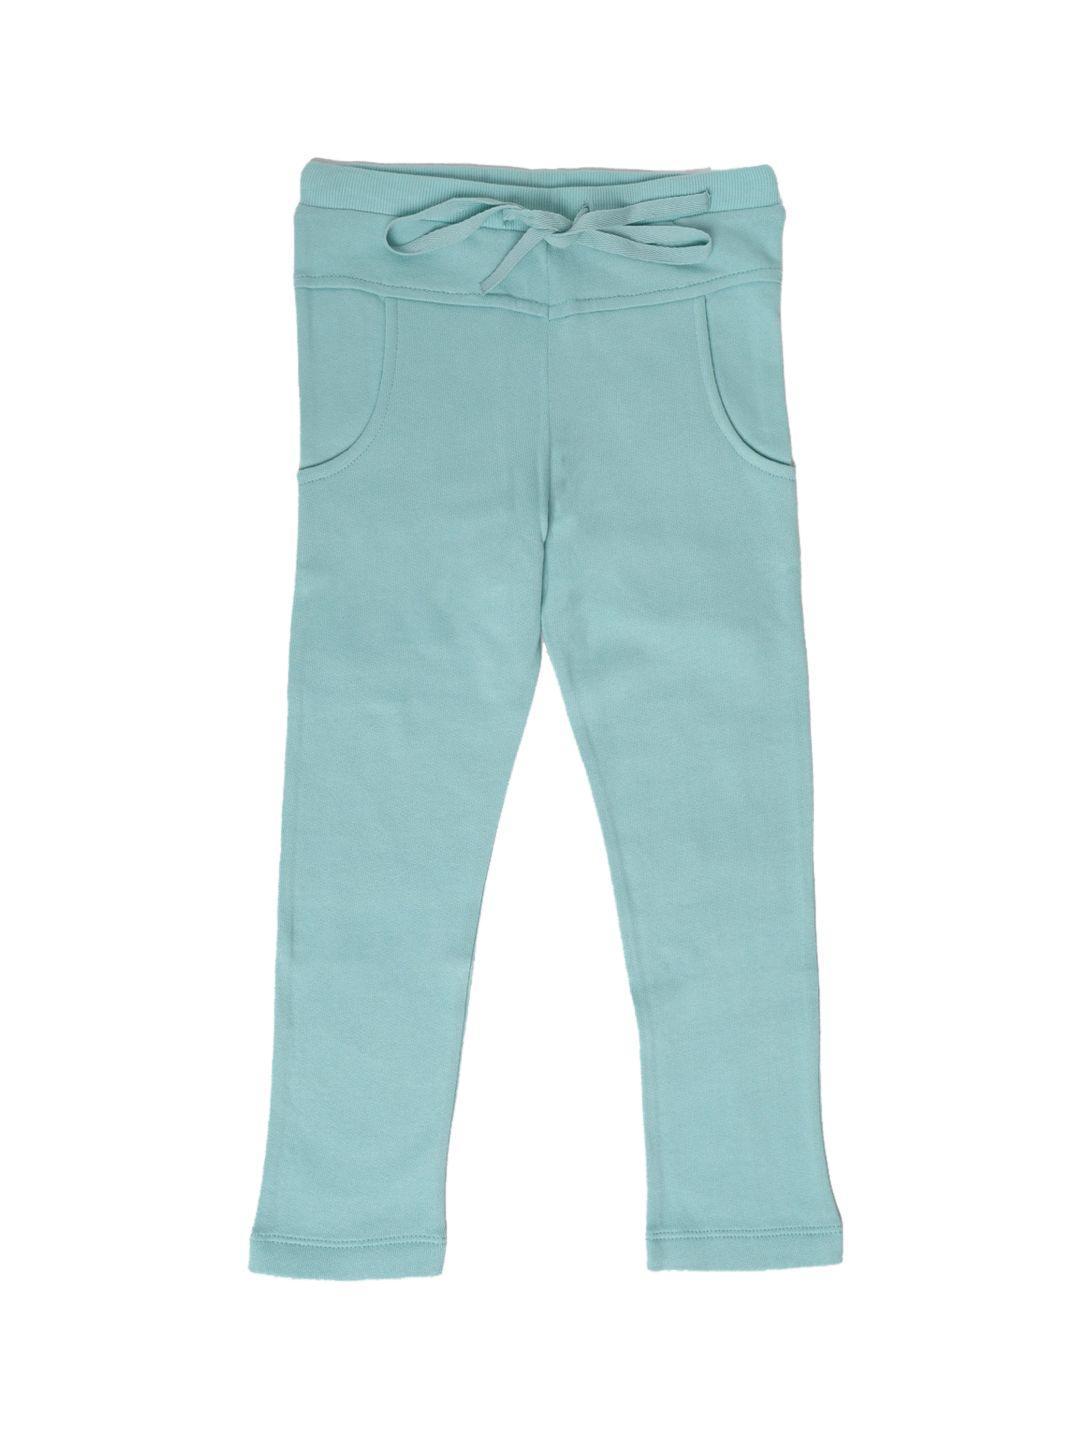 Nino Bambino Boys Turquoise Blue Solid Pure Cotton Track Pant